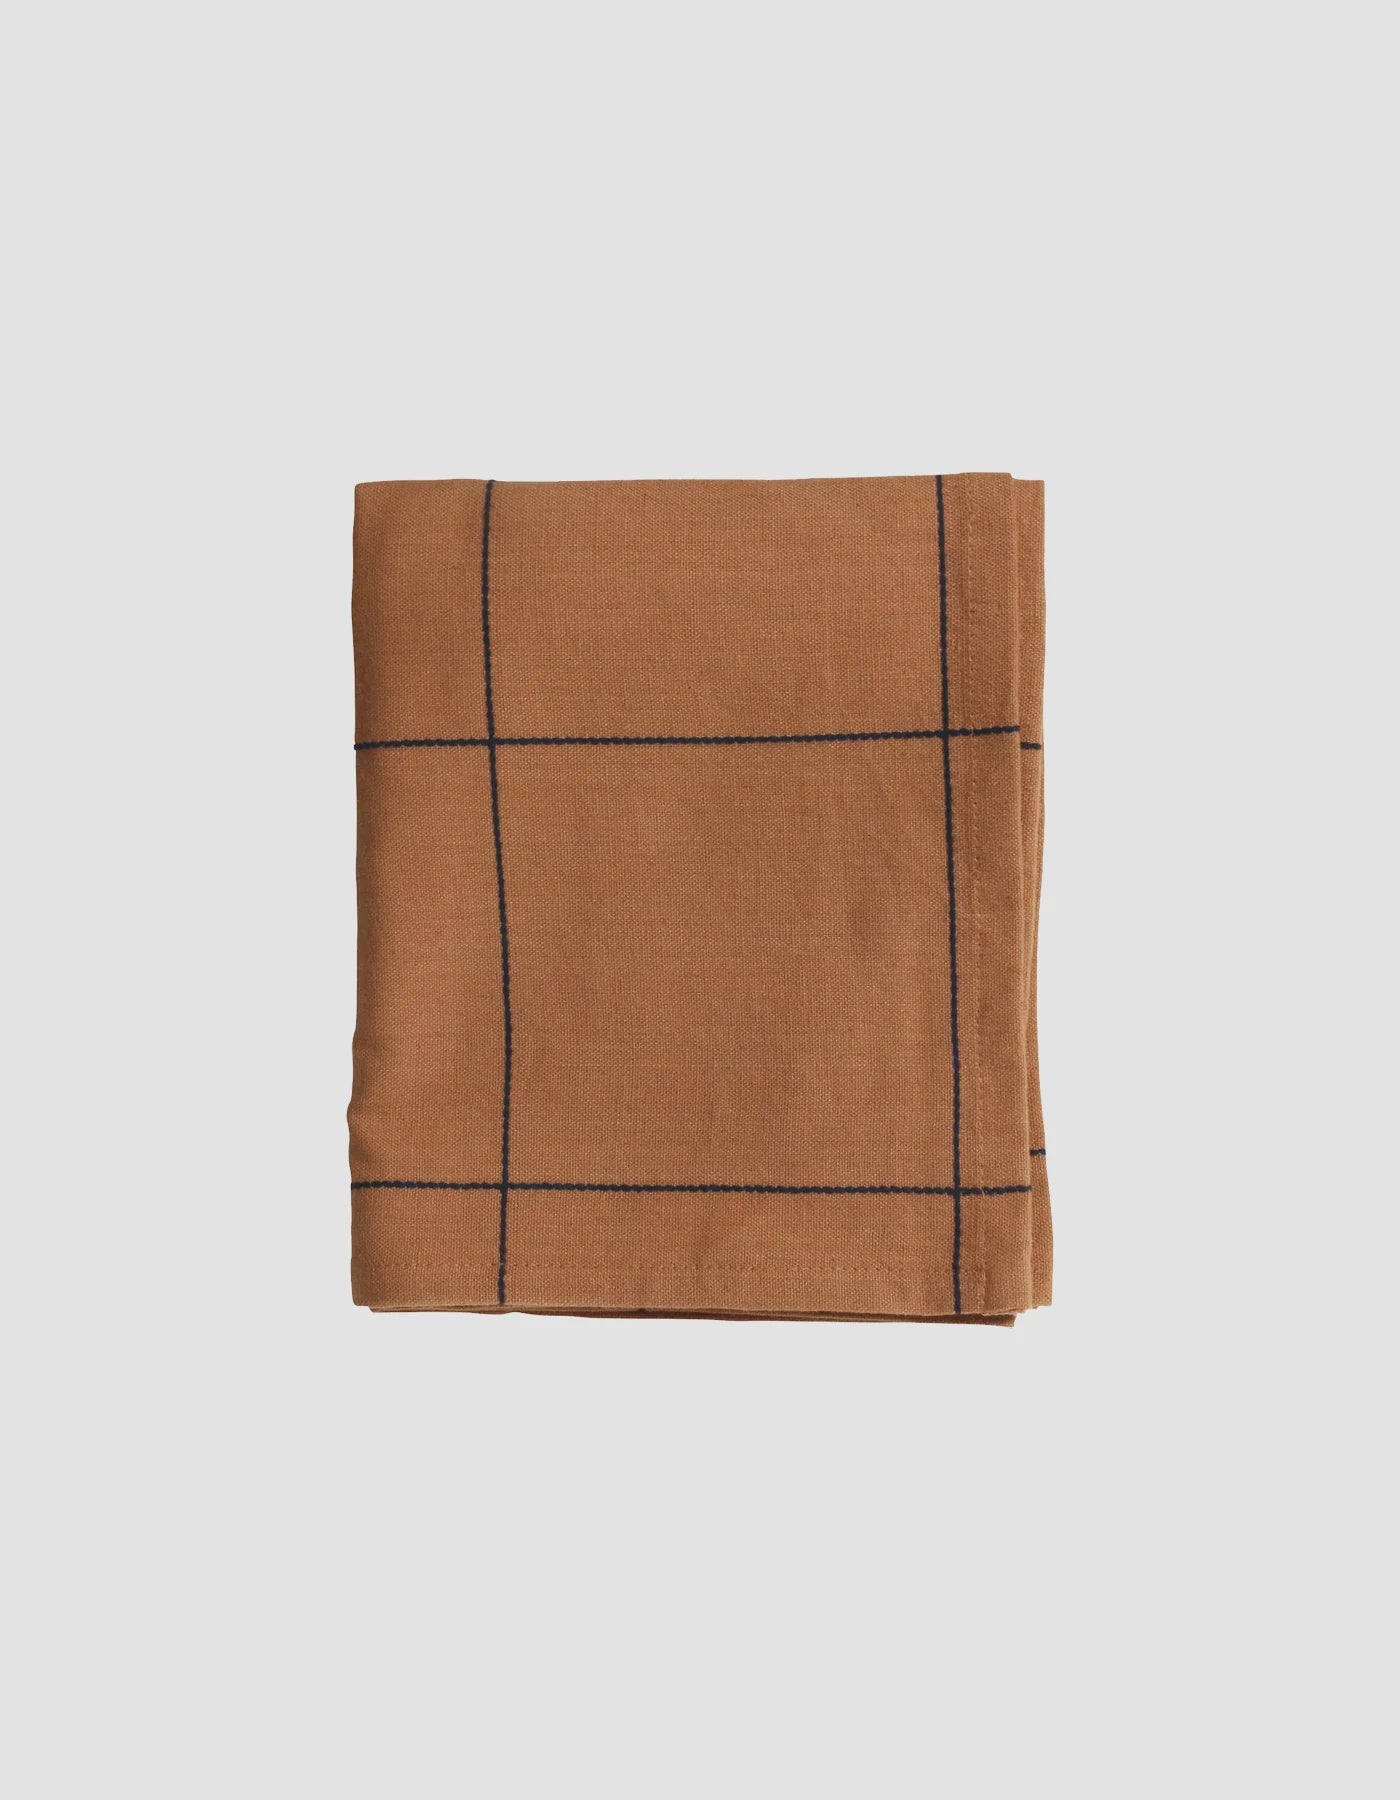 Robert Gordon Tea Towel - Nutmeg with Navy Stitching, archie